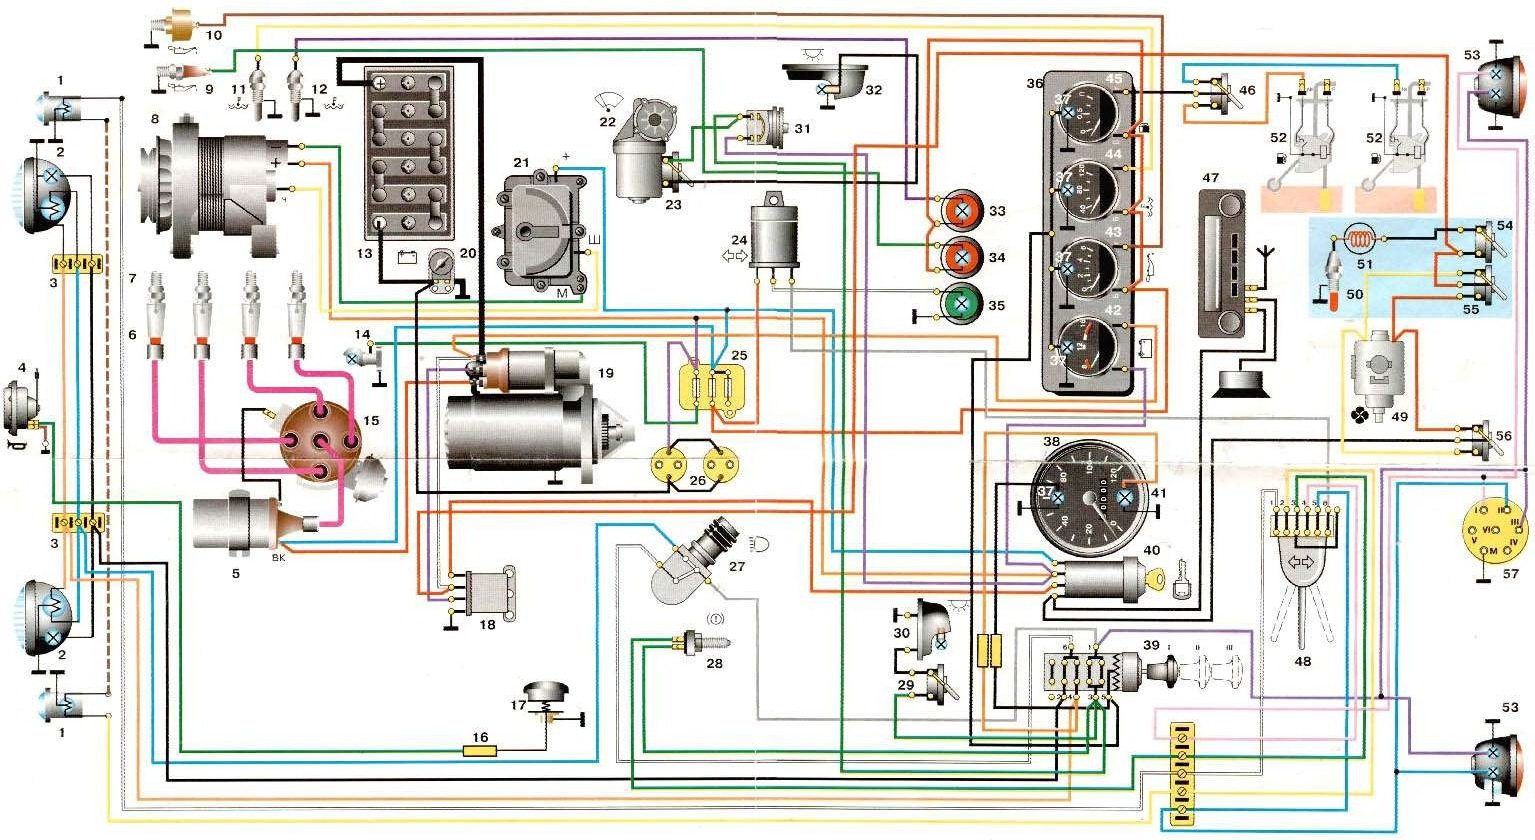 Схема электропроводки Камаз 5511 : видео-инструкция по монтажу проводки своими руками, фото